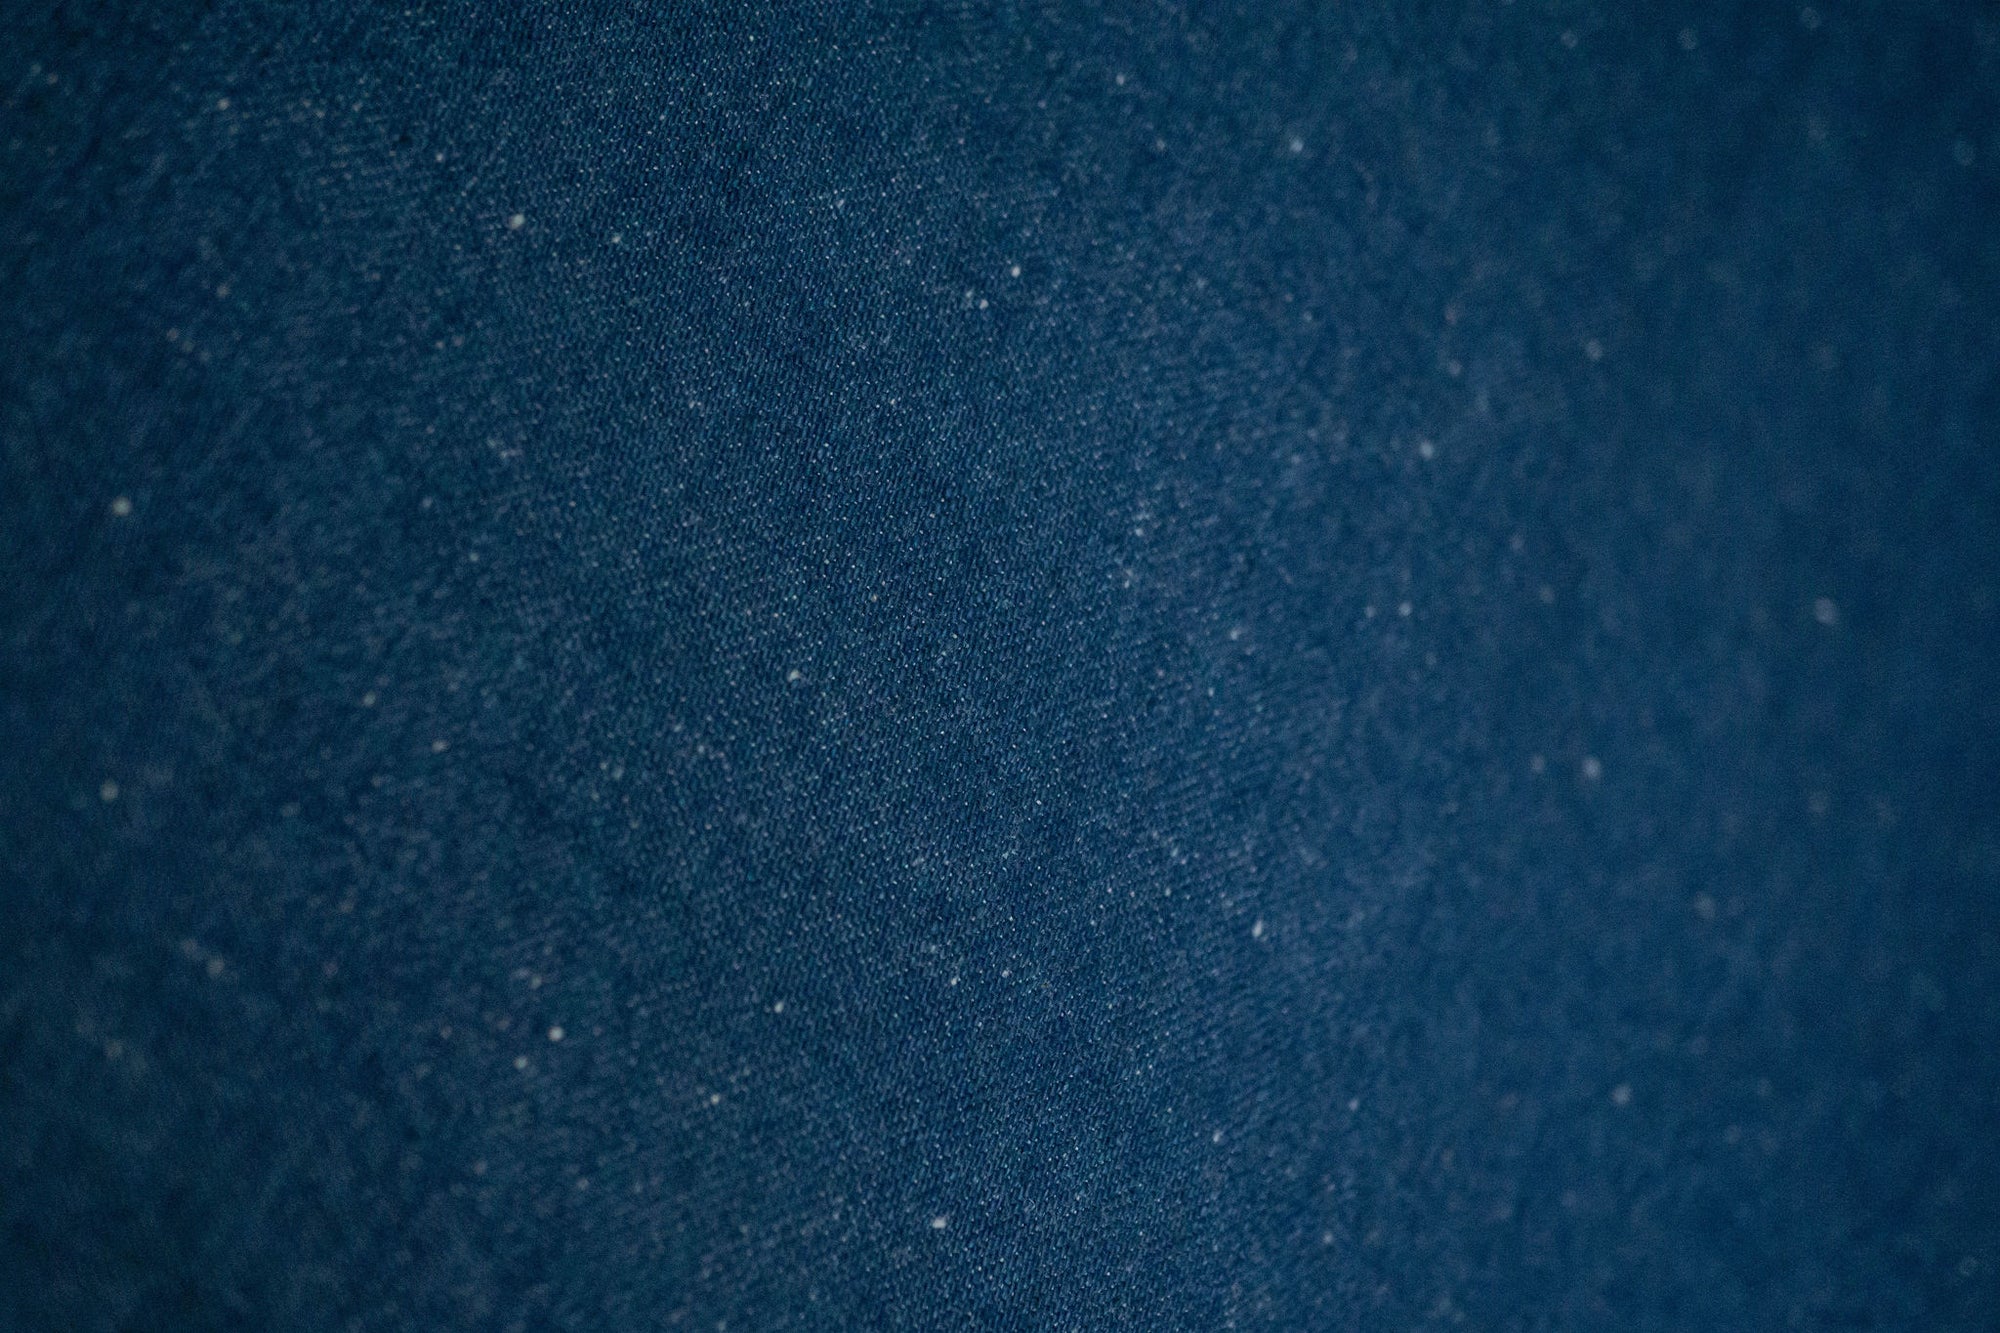 Freenote Cloth Sinclair - Pacific Blue